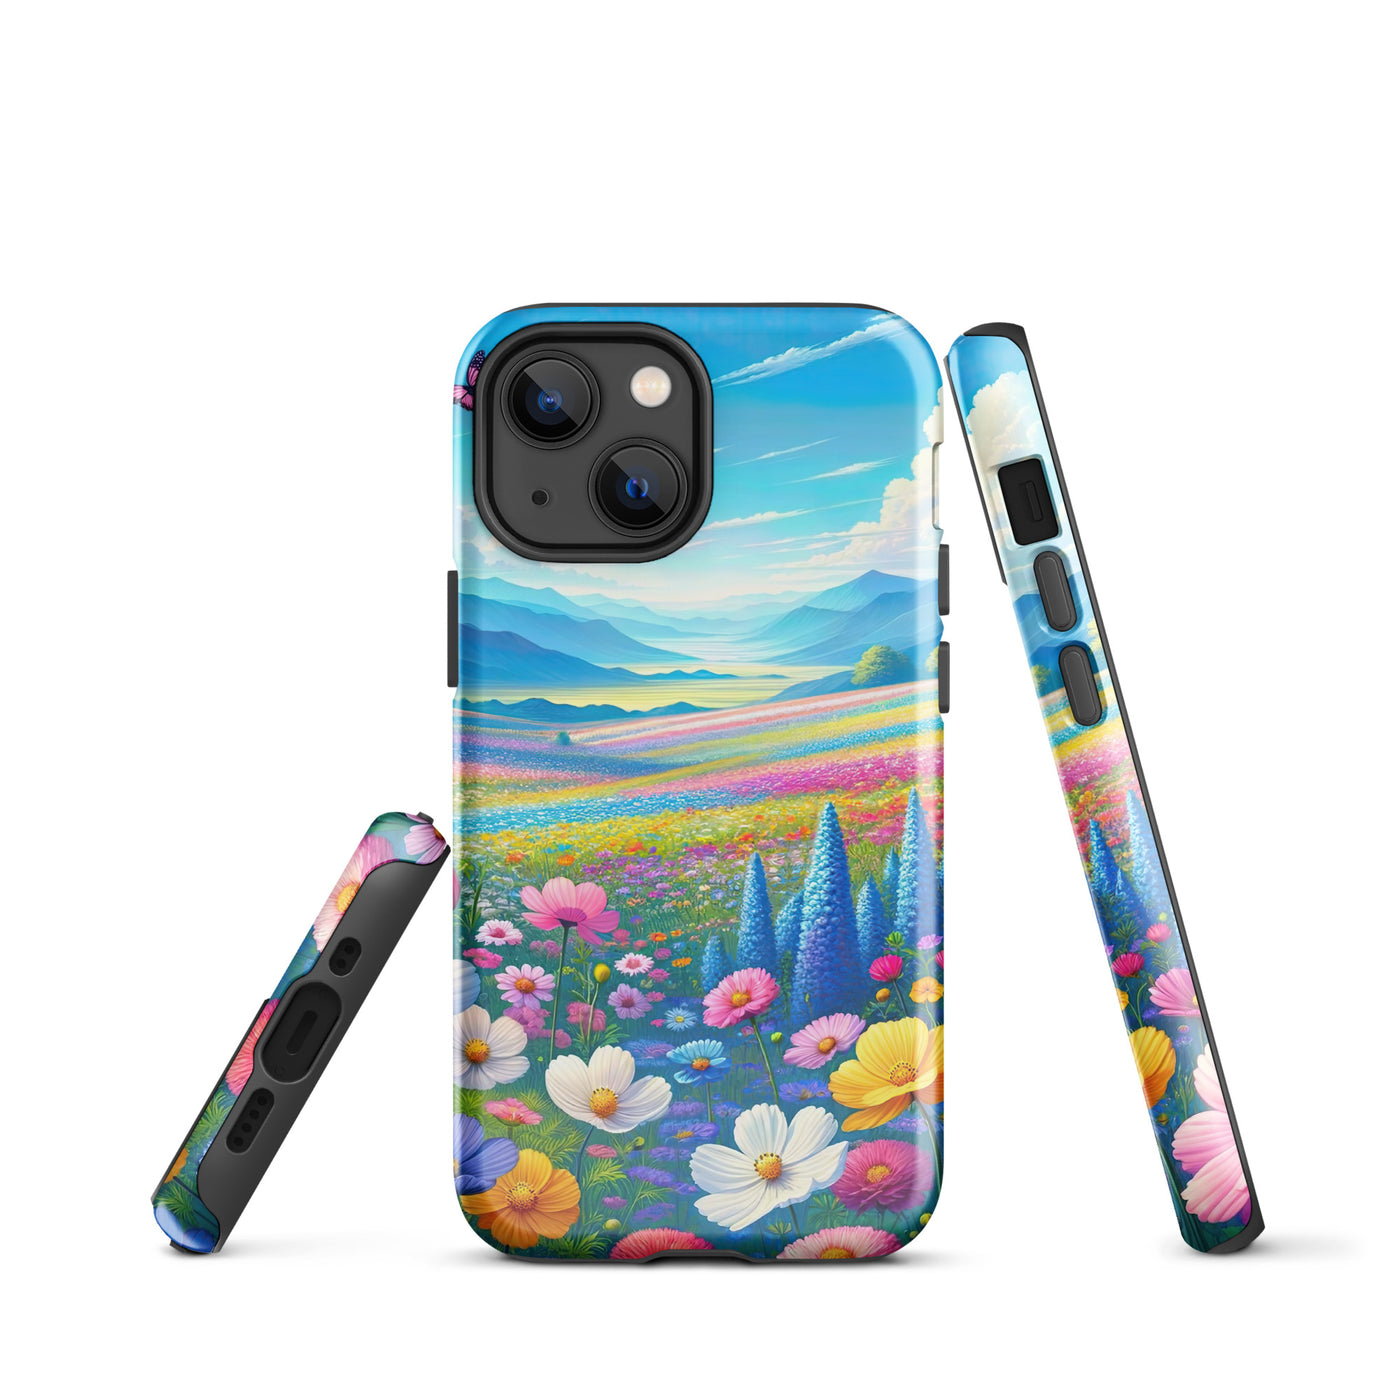 Weitläufiges Blumenfeld unter himmelblauem Himmel, leuchtende Flora - iPhone Schutzhülle (robust) camping xxx yyy zzz iPhone 13 mini